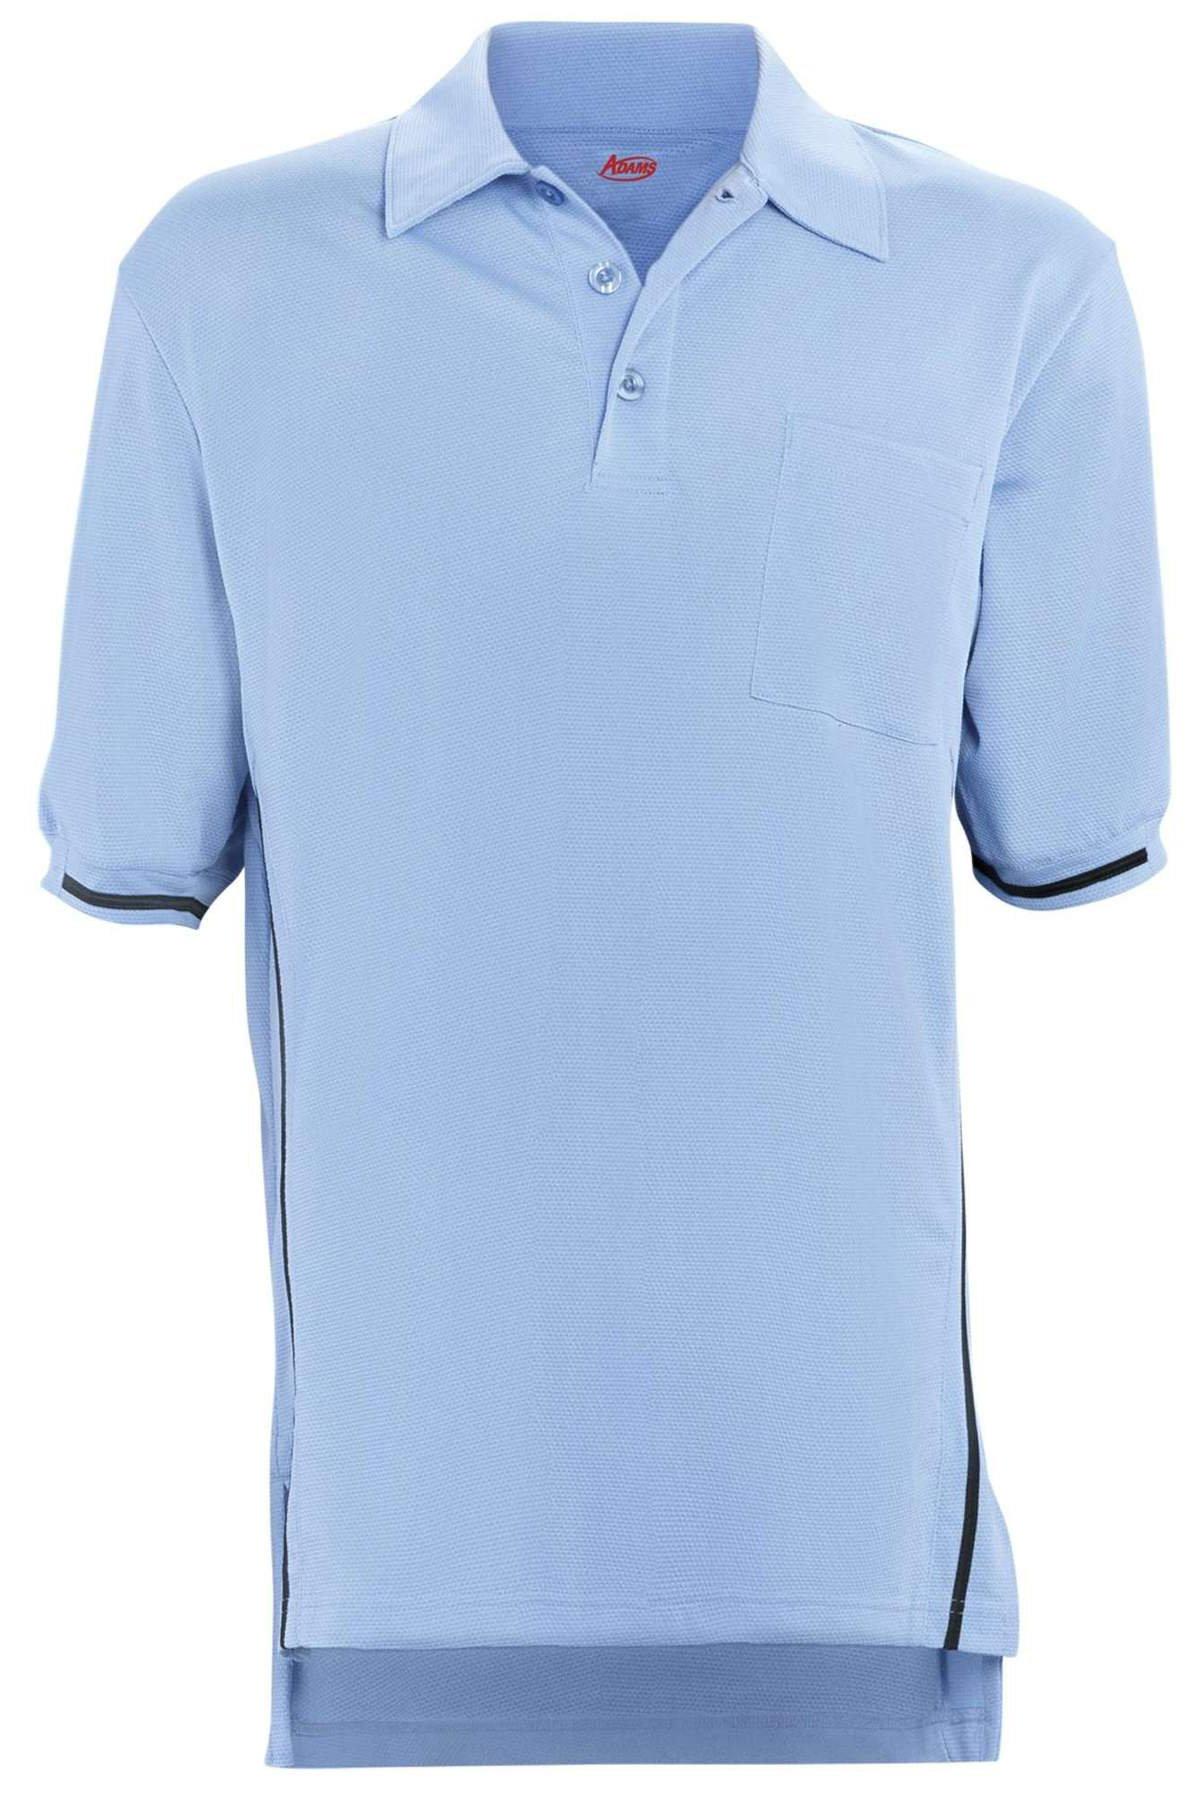 Sized for Chest Protector Adams USA Short Sleeve Baseball/Softball Umpire Shirt 